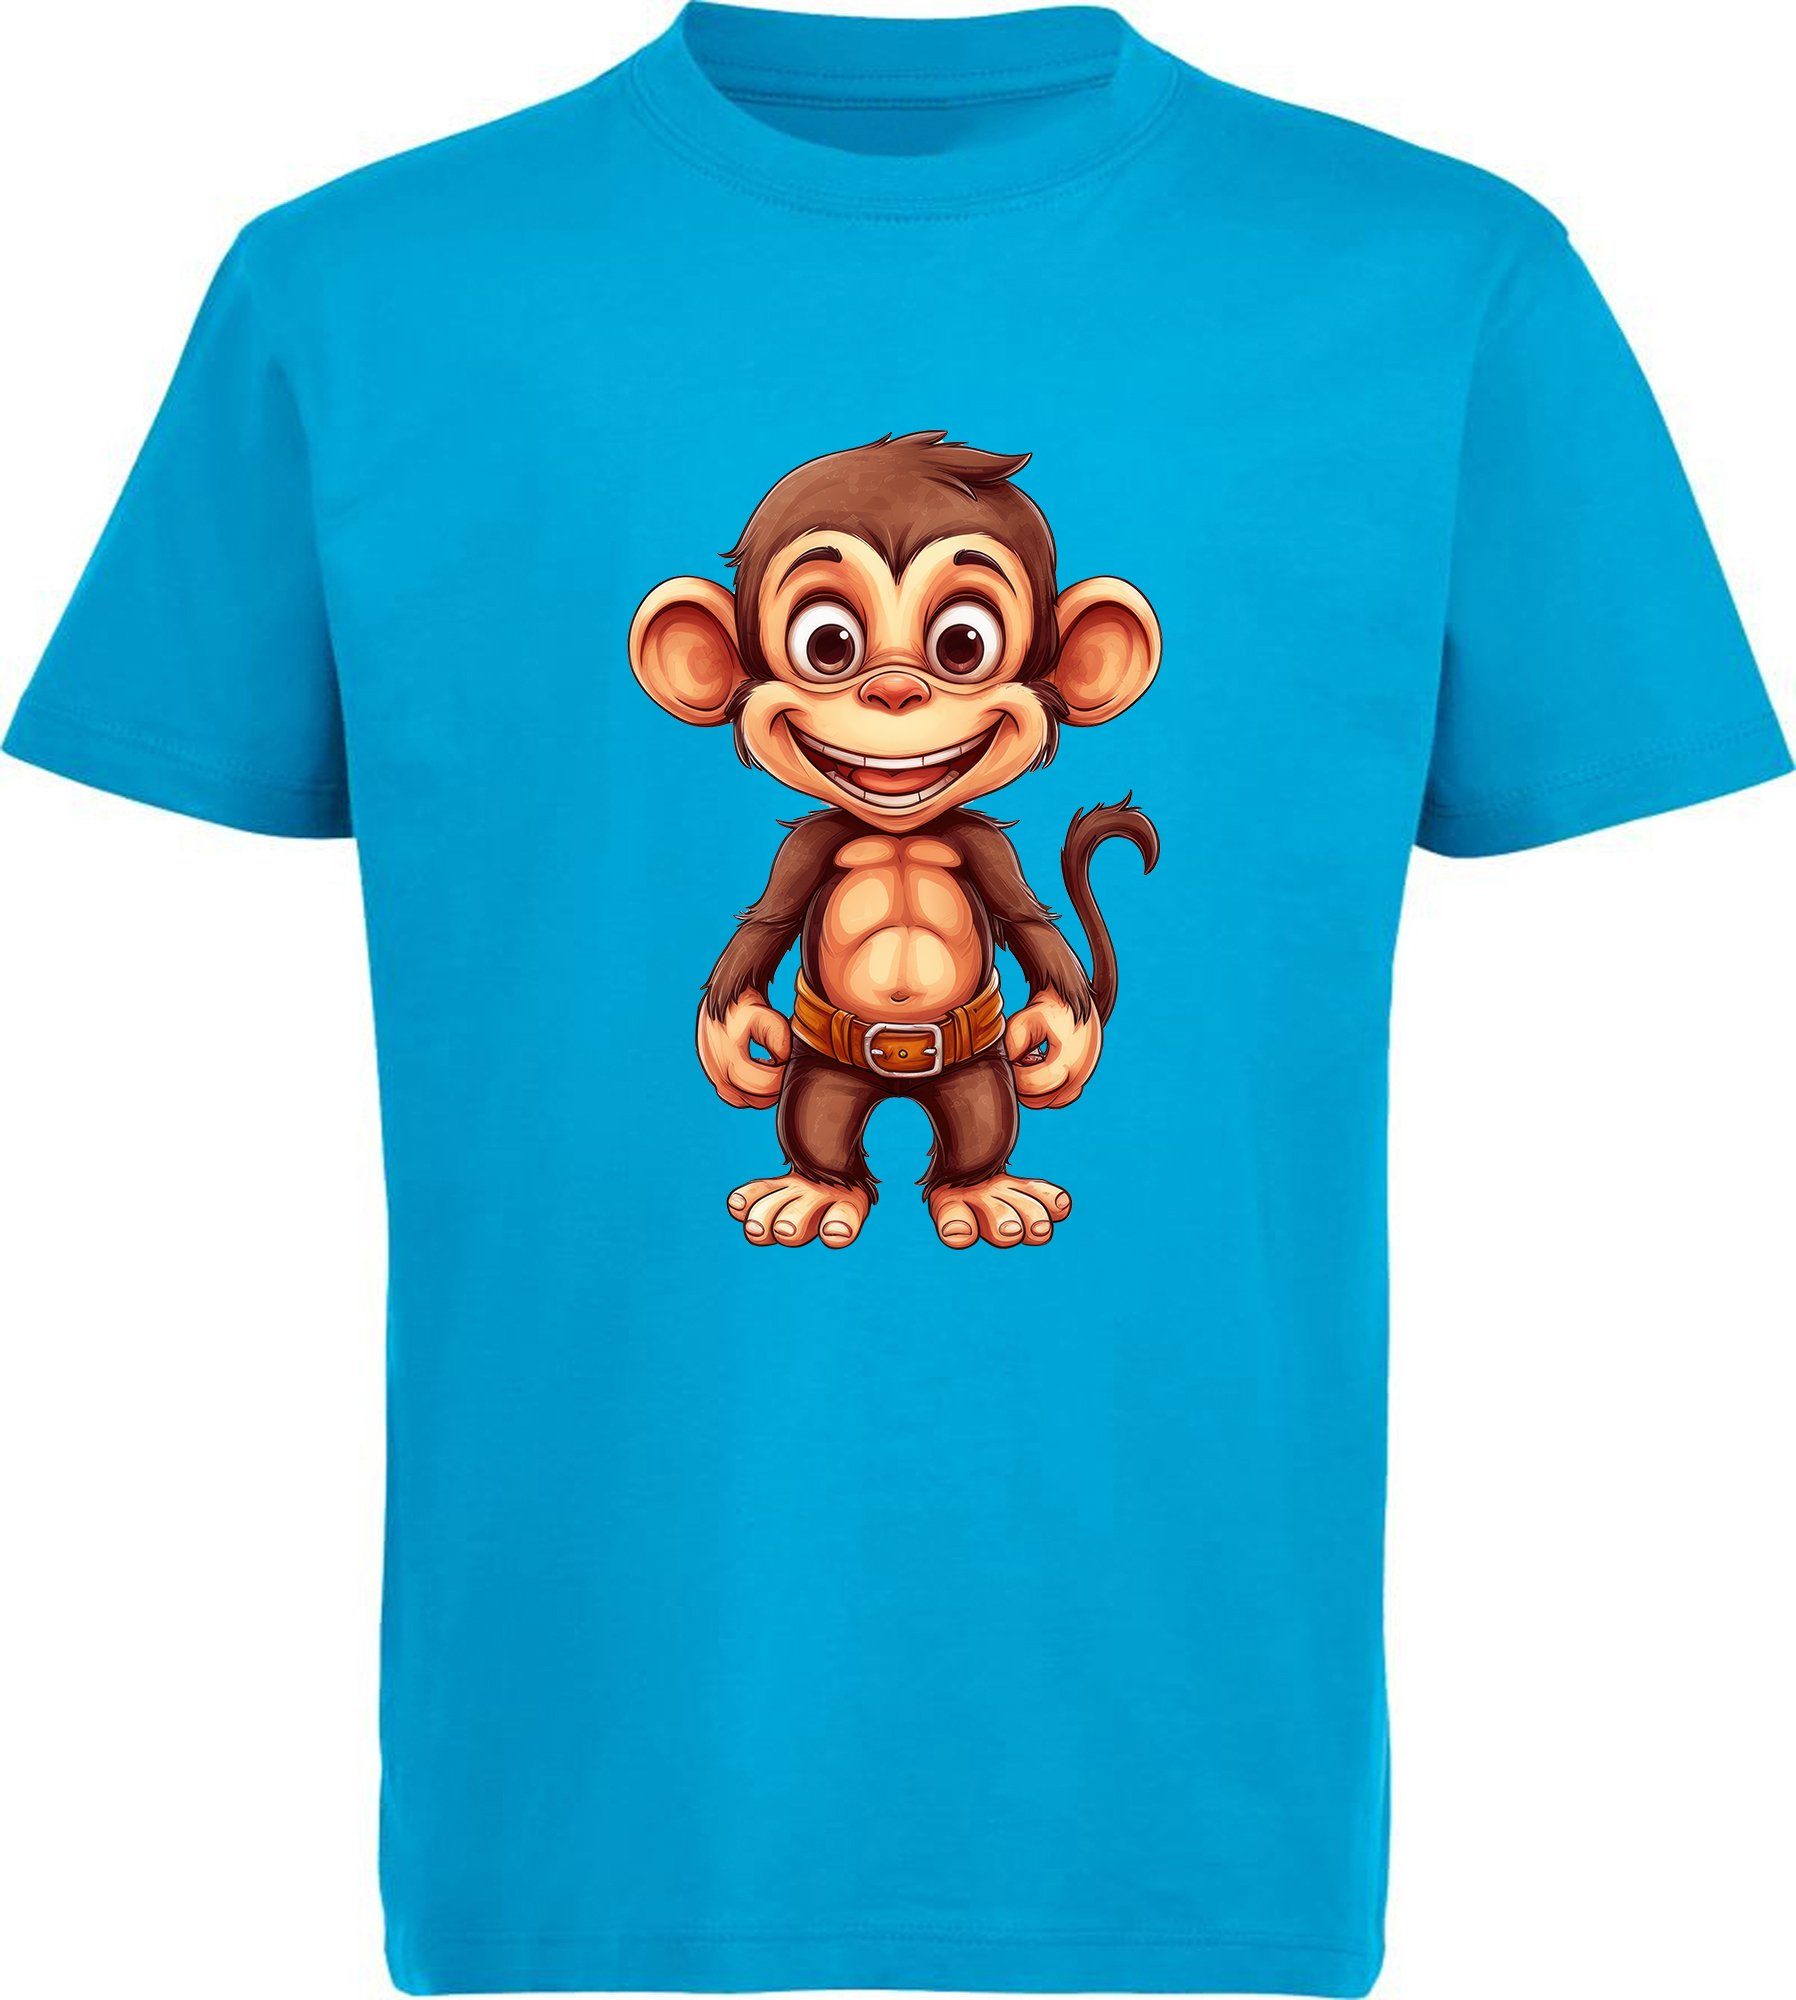 MyDesign24 T-Shirt Kinder Wildtier Print Shirt bedruckt - Baby Affe Schimpanse Baumwollshirt mit Aufdruck, i276 aqua blau